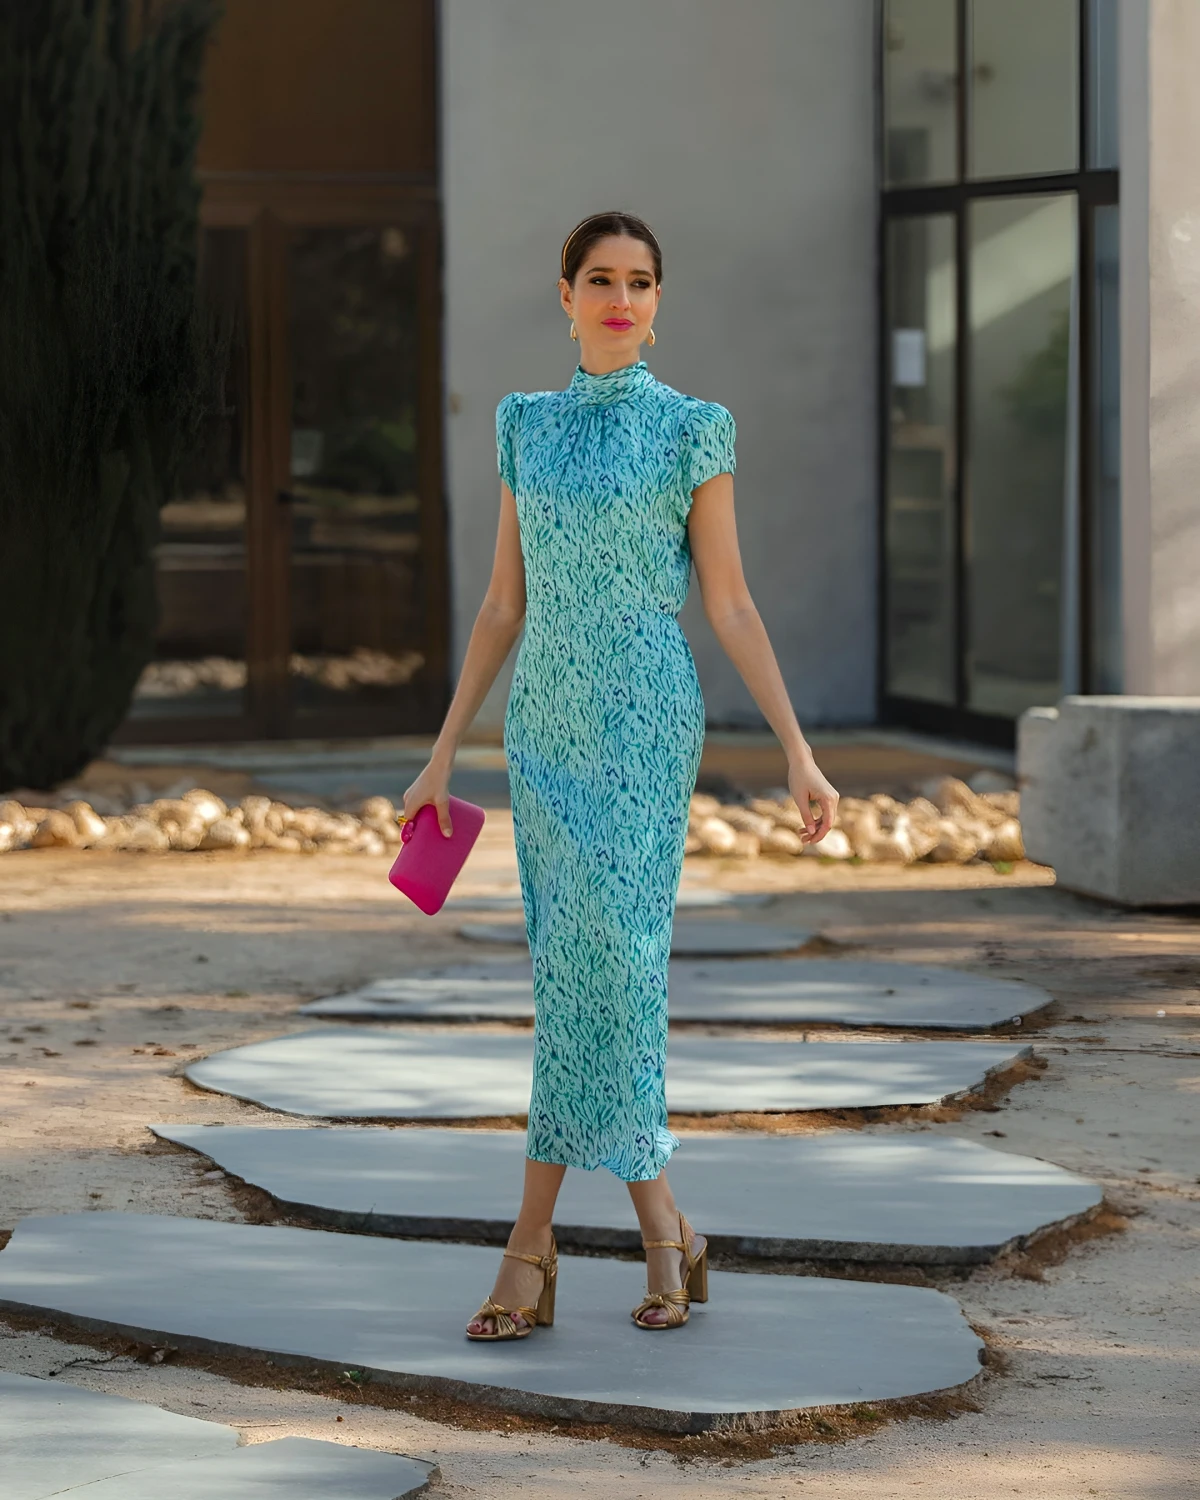 robe bleu elegante longue pour occasion speciale